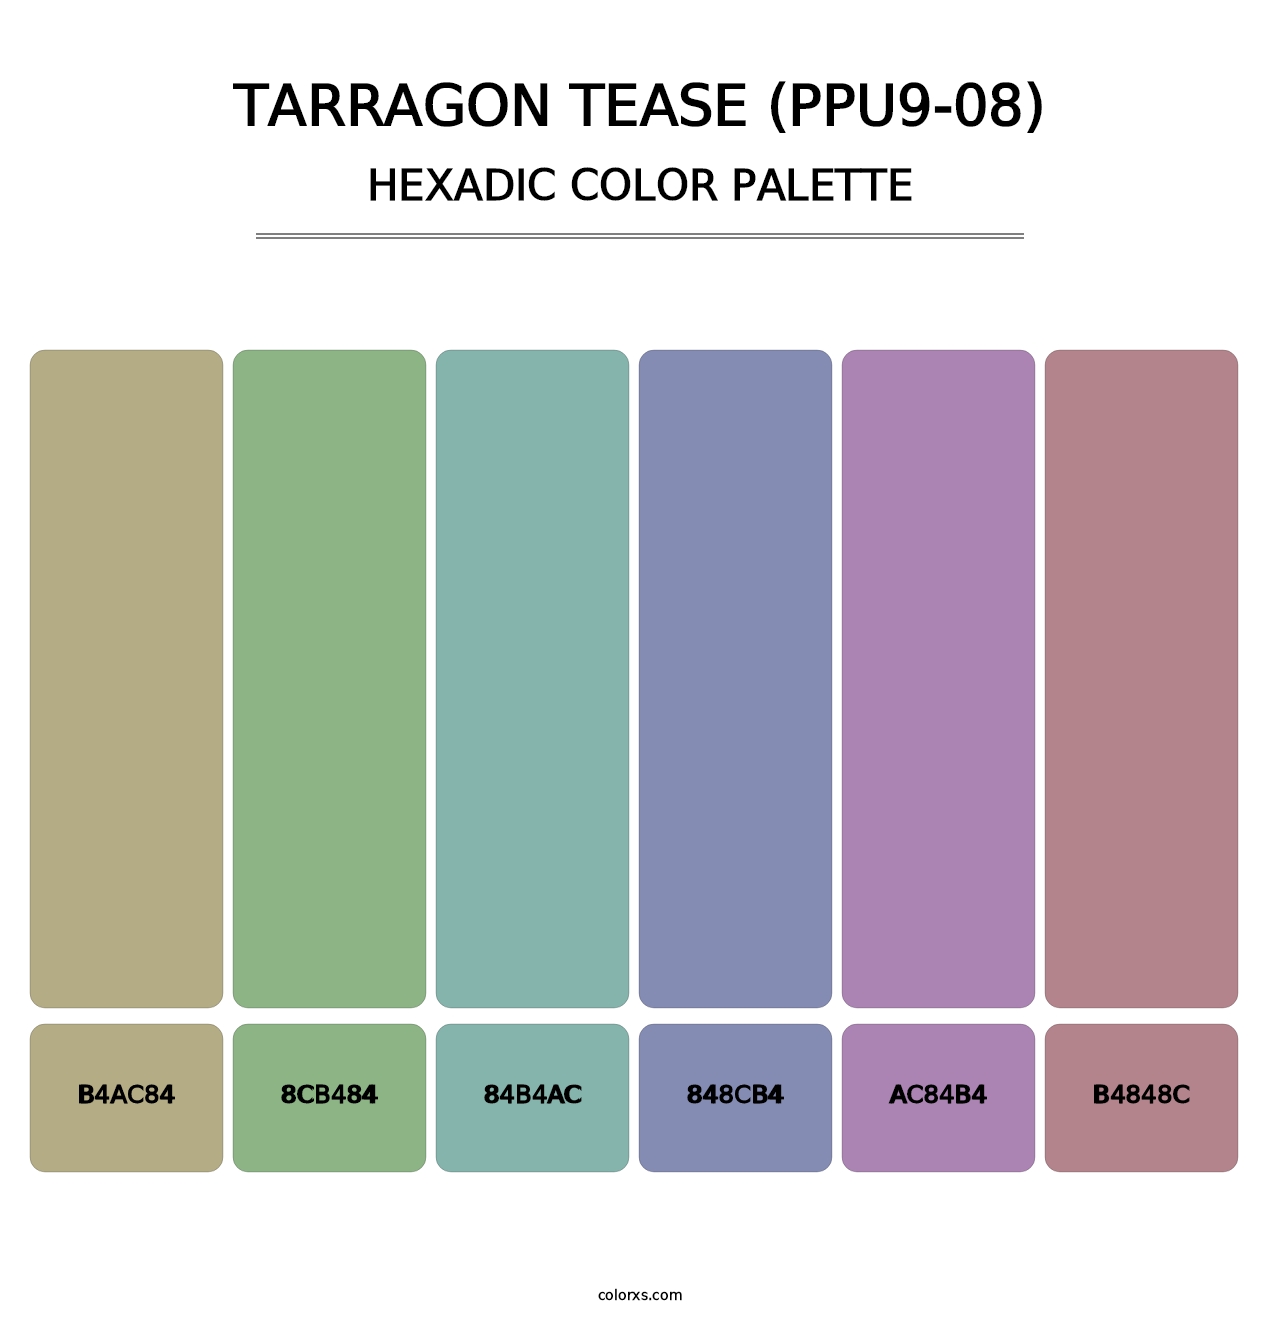 Tarragon Tease (PPU9-08) - Hexadic Color Palette